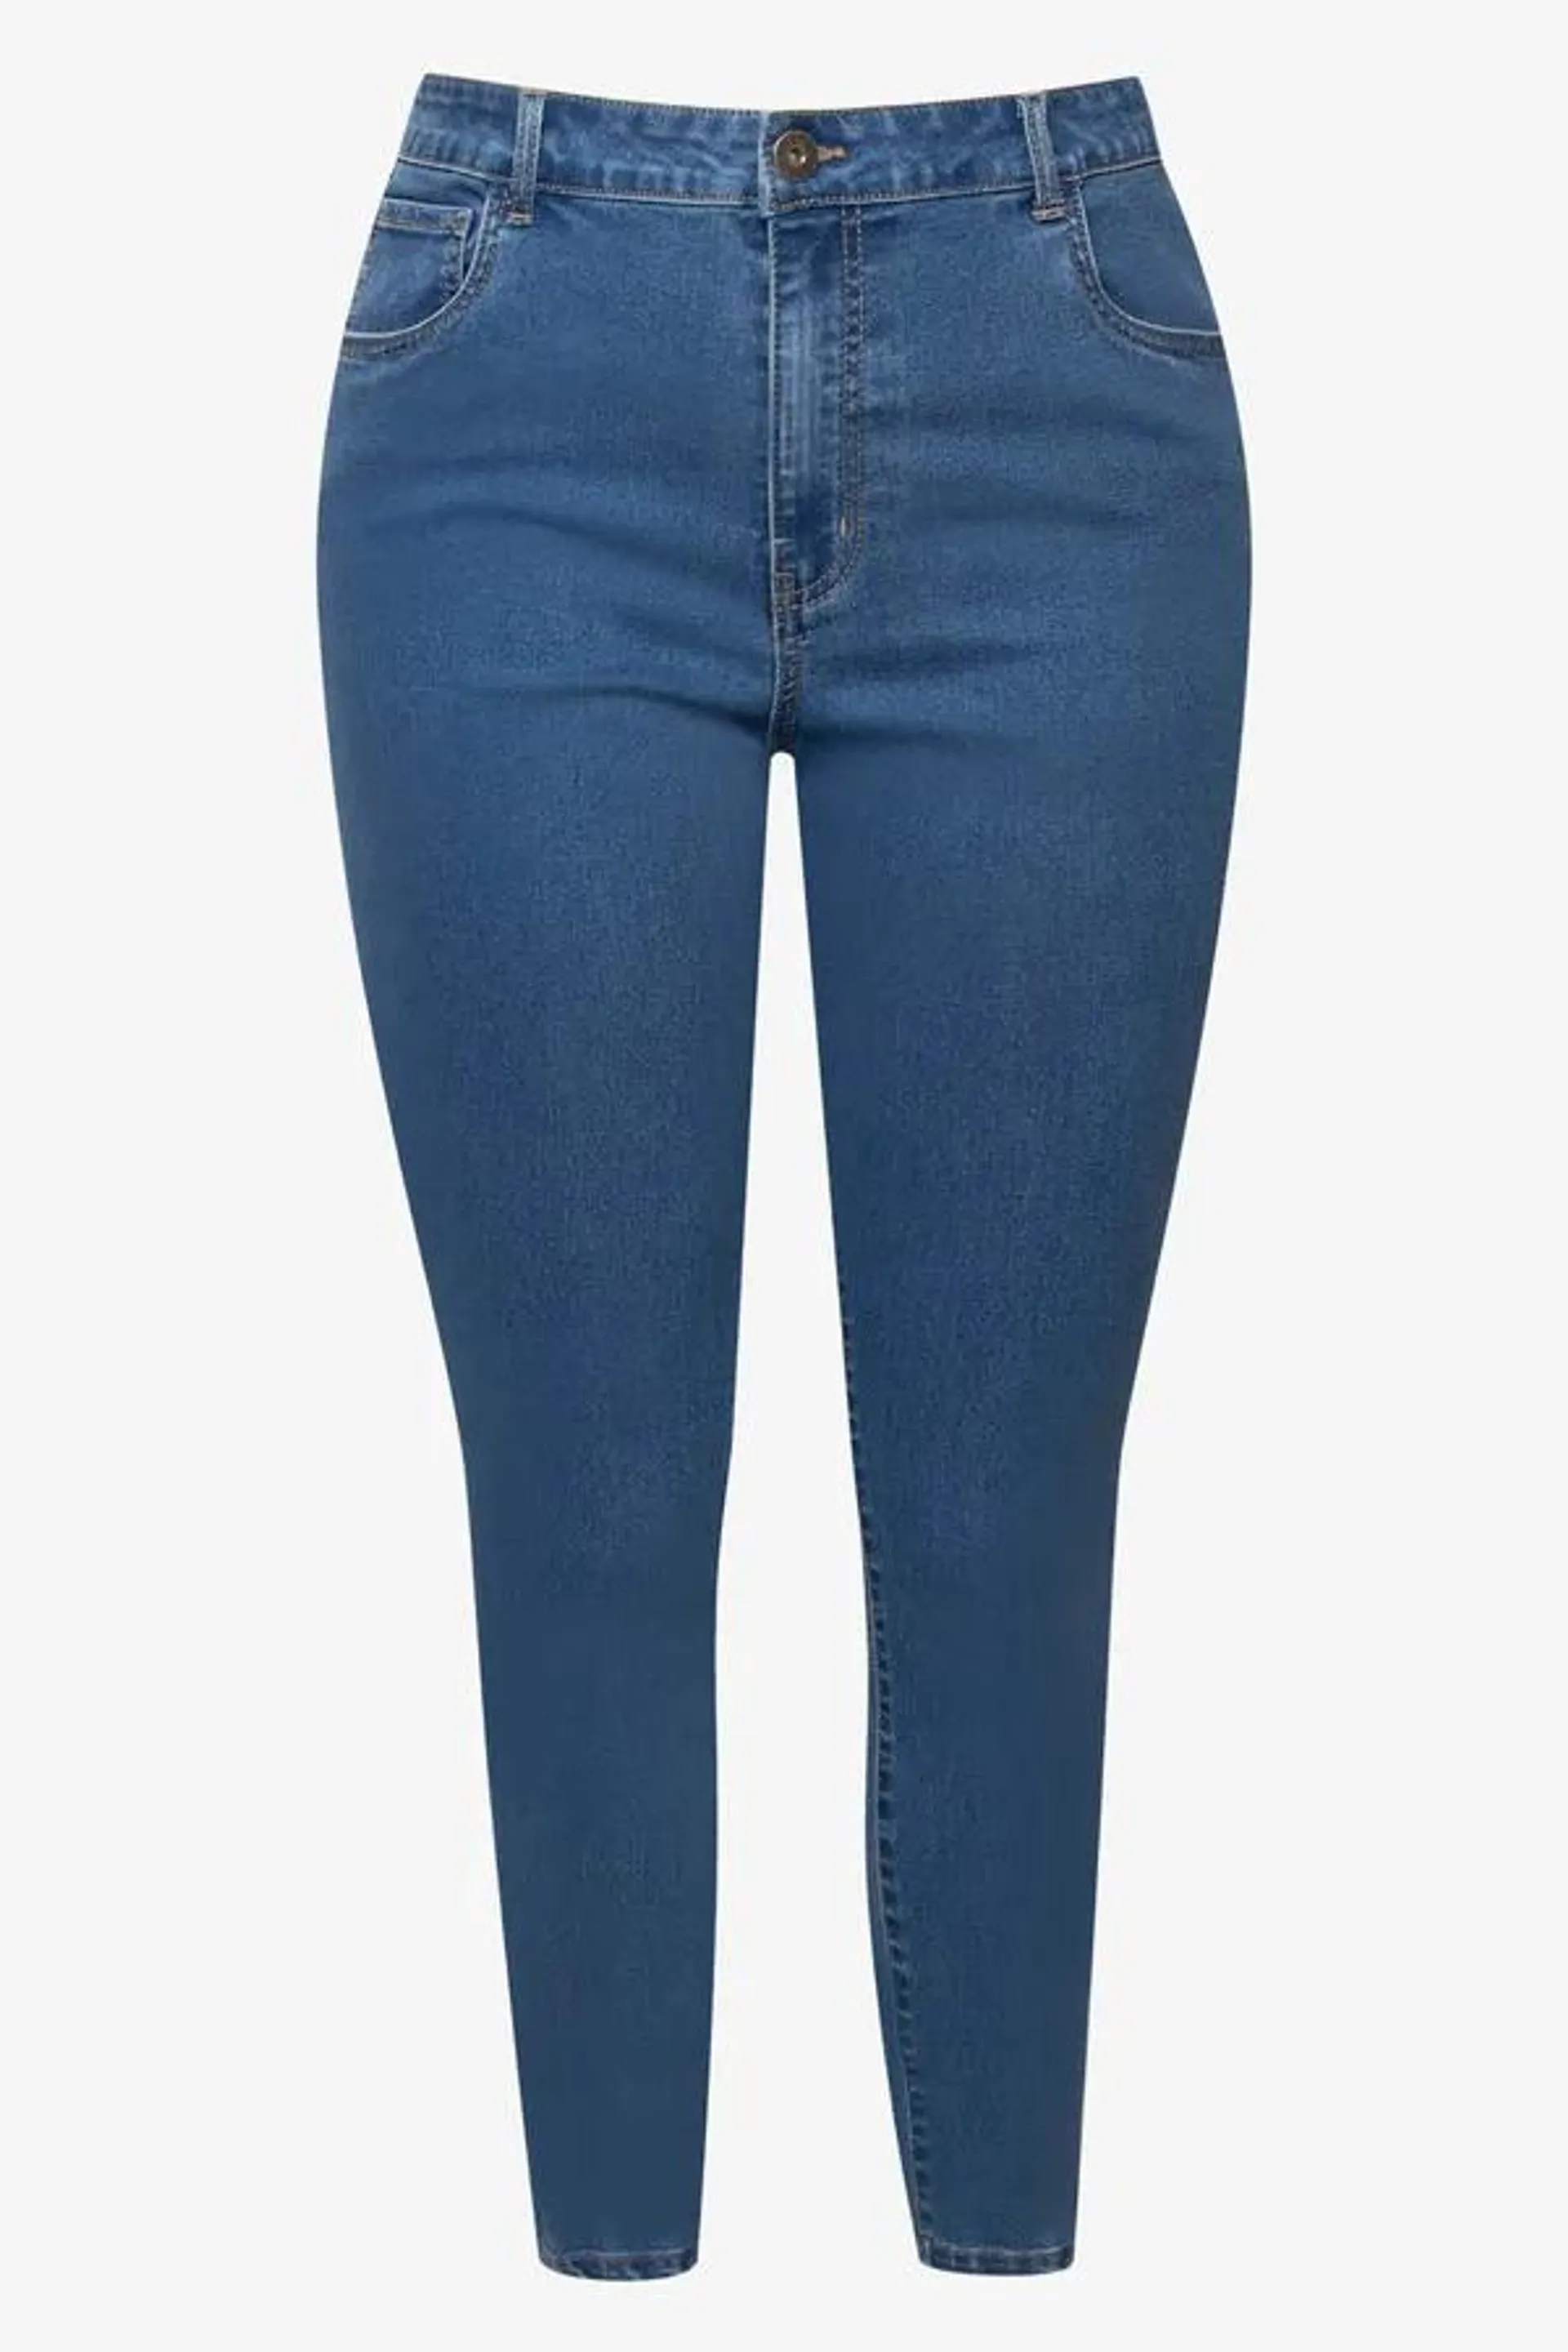 Lift, slim & shape skinny denim jeans blue